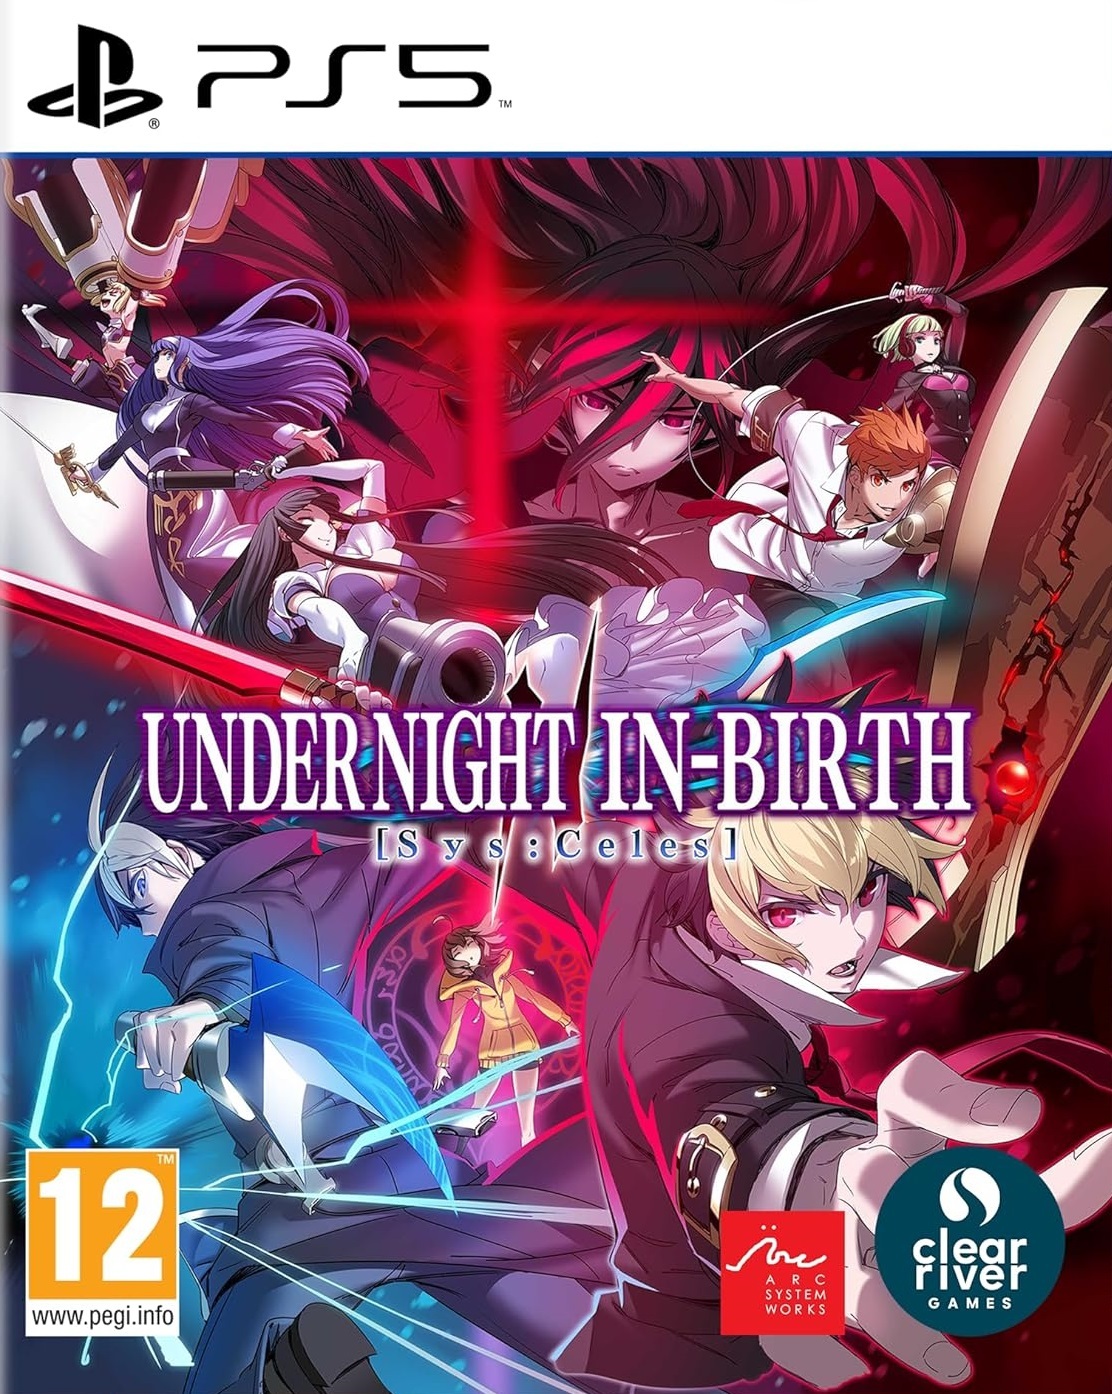 jaquette du jeu vidéo UNDER NIGHT IN-BIRTH II [Sys:Celes]